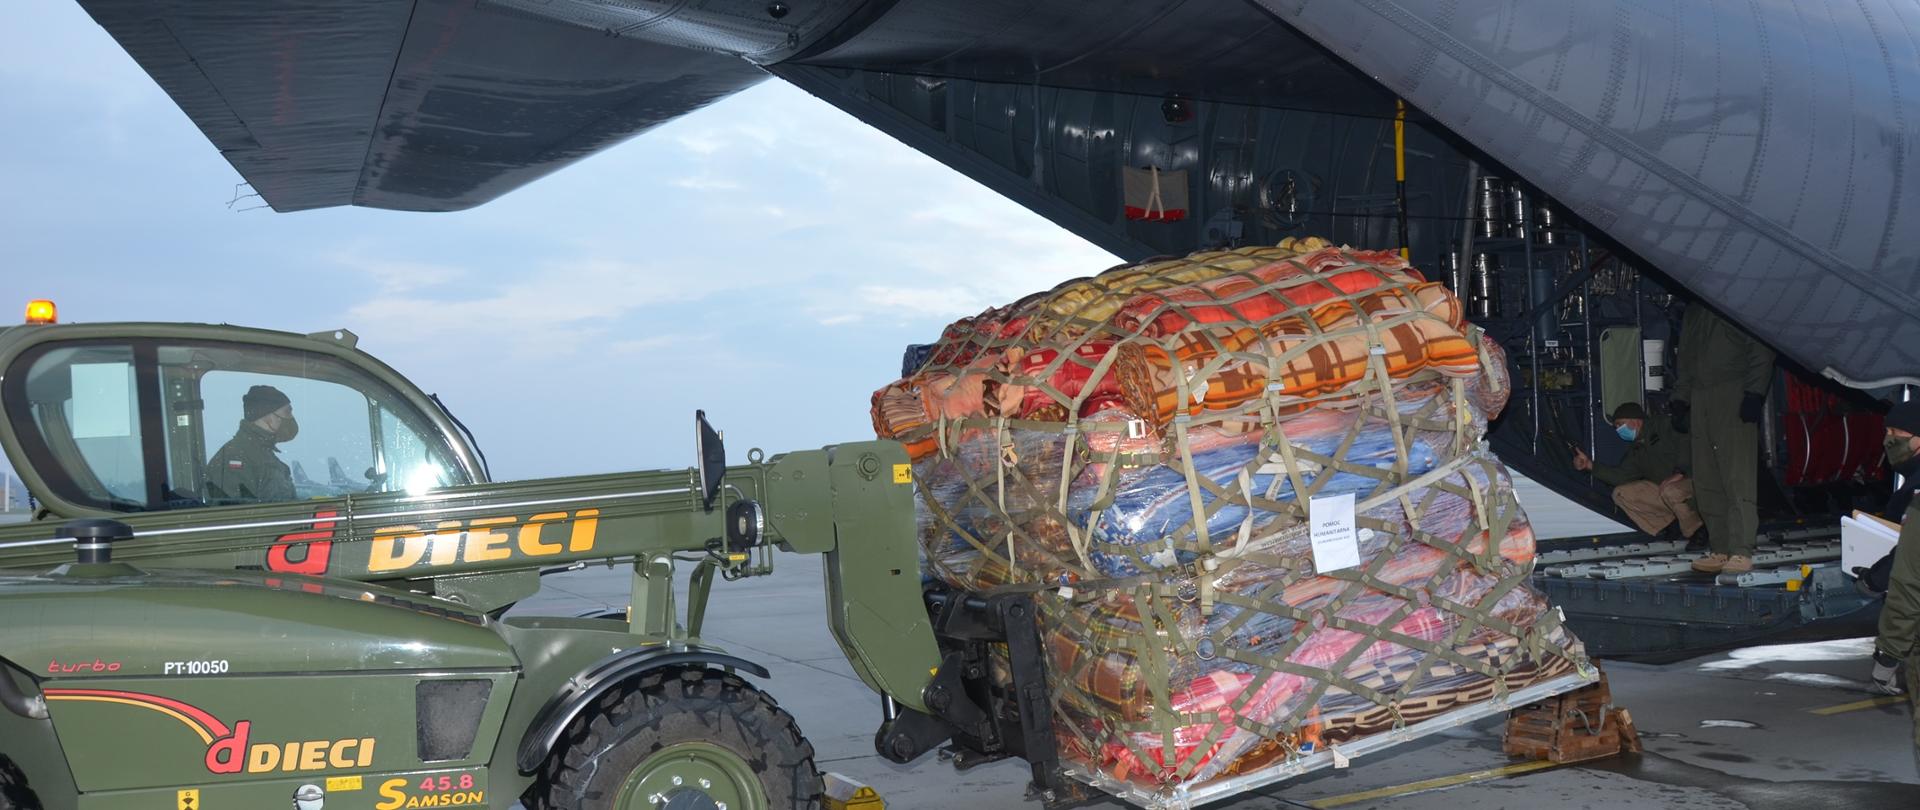 Polish humanitarian aid for Iraq photo 8th Military Air Transport Base